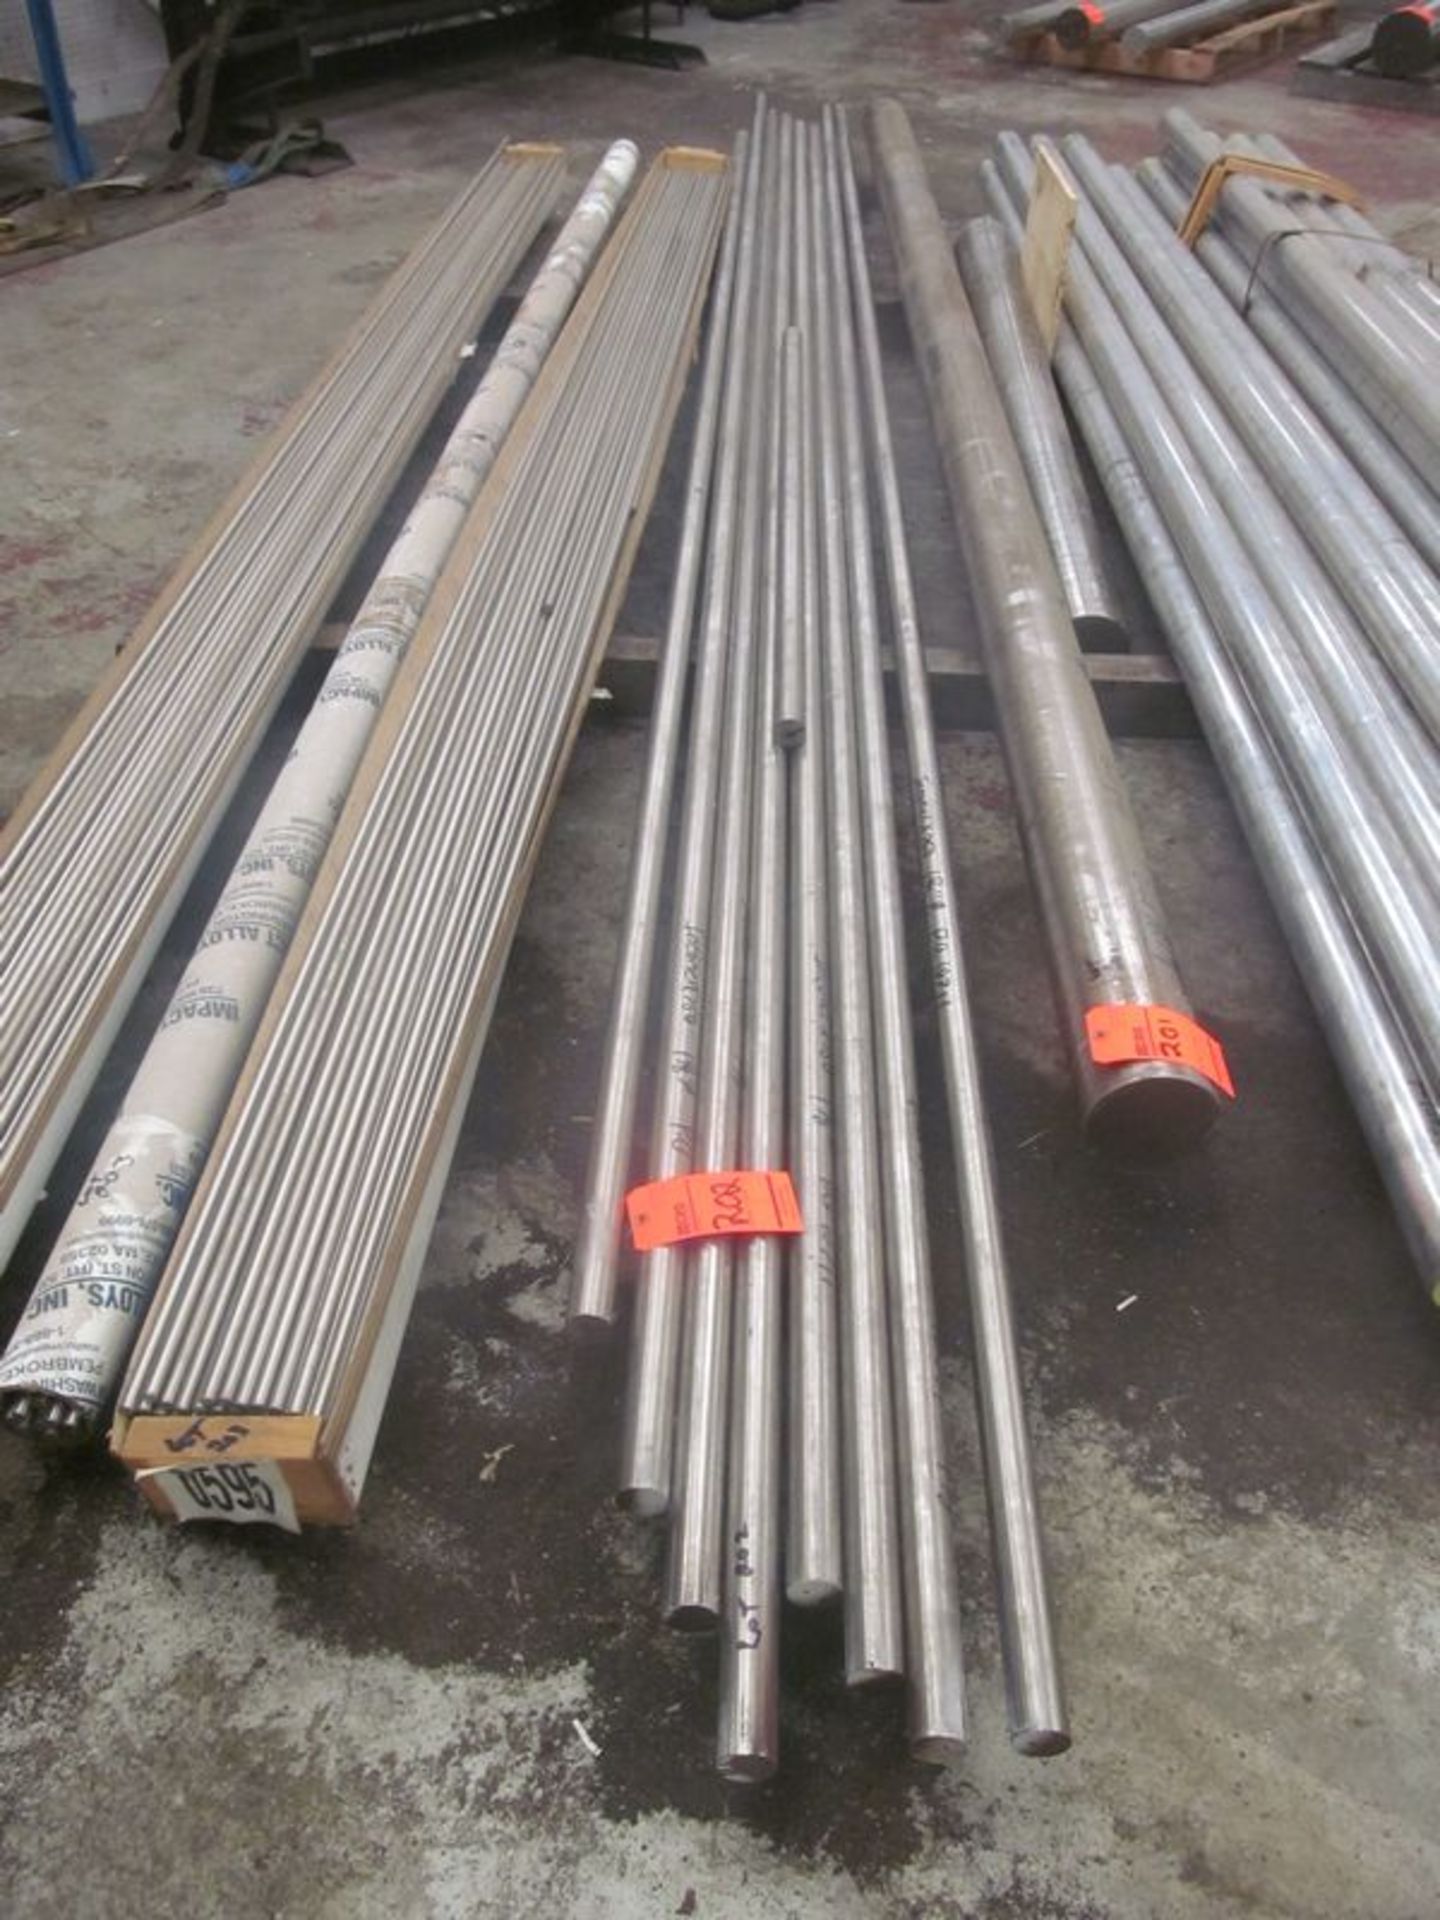 Lot of (9) pieces Steel grade 750 including (1) 1 5/8" diameter x 59" length, (1) 1 5/8" diameter